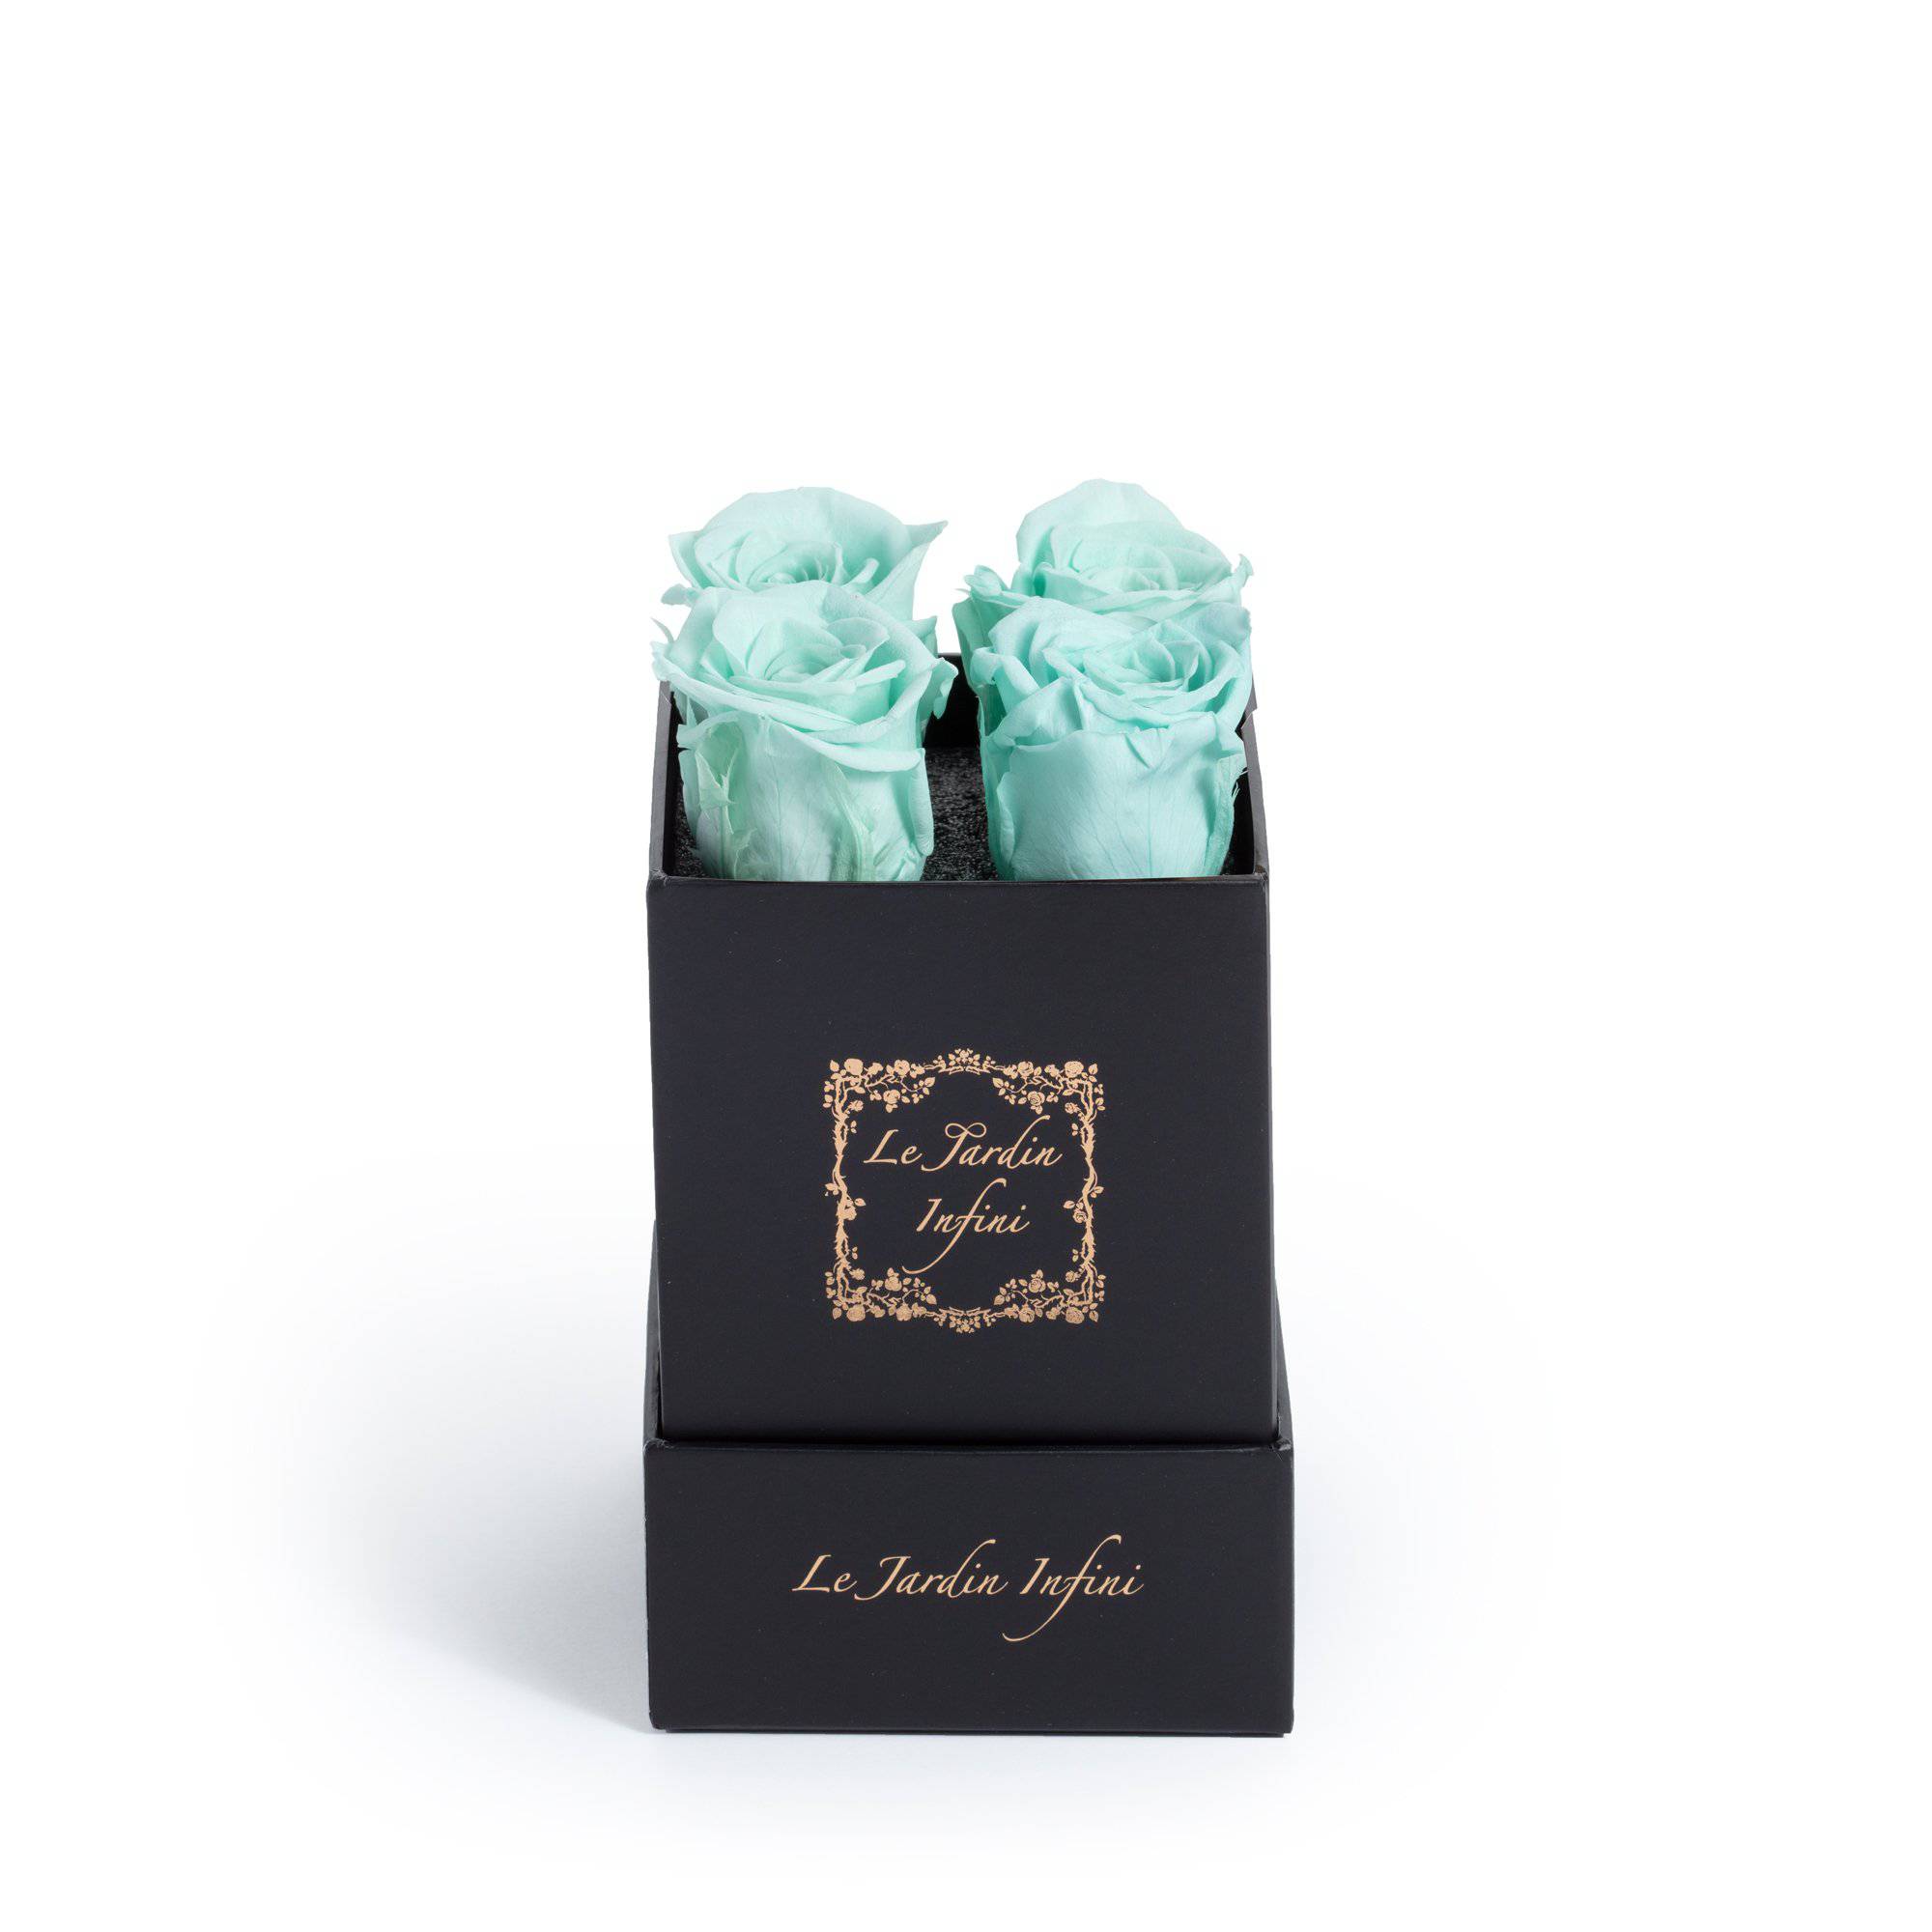 Light Green Preserved Roses - Small Square Black Box